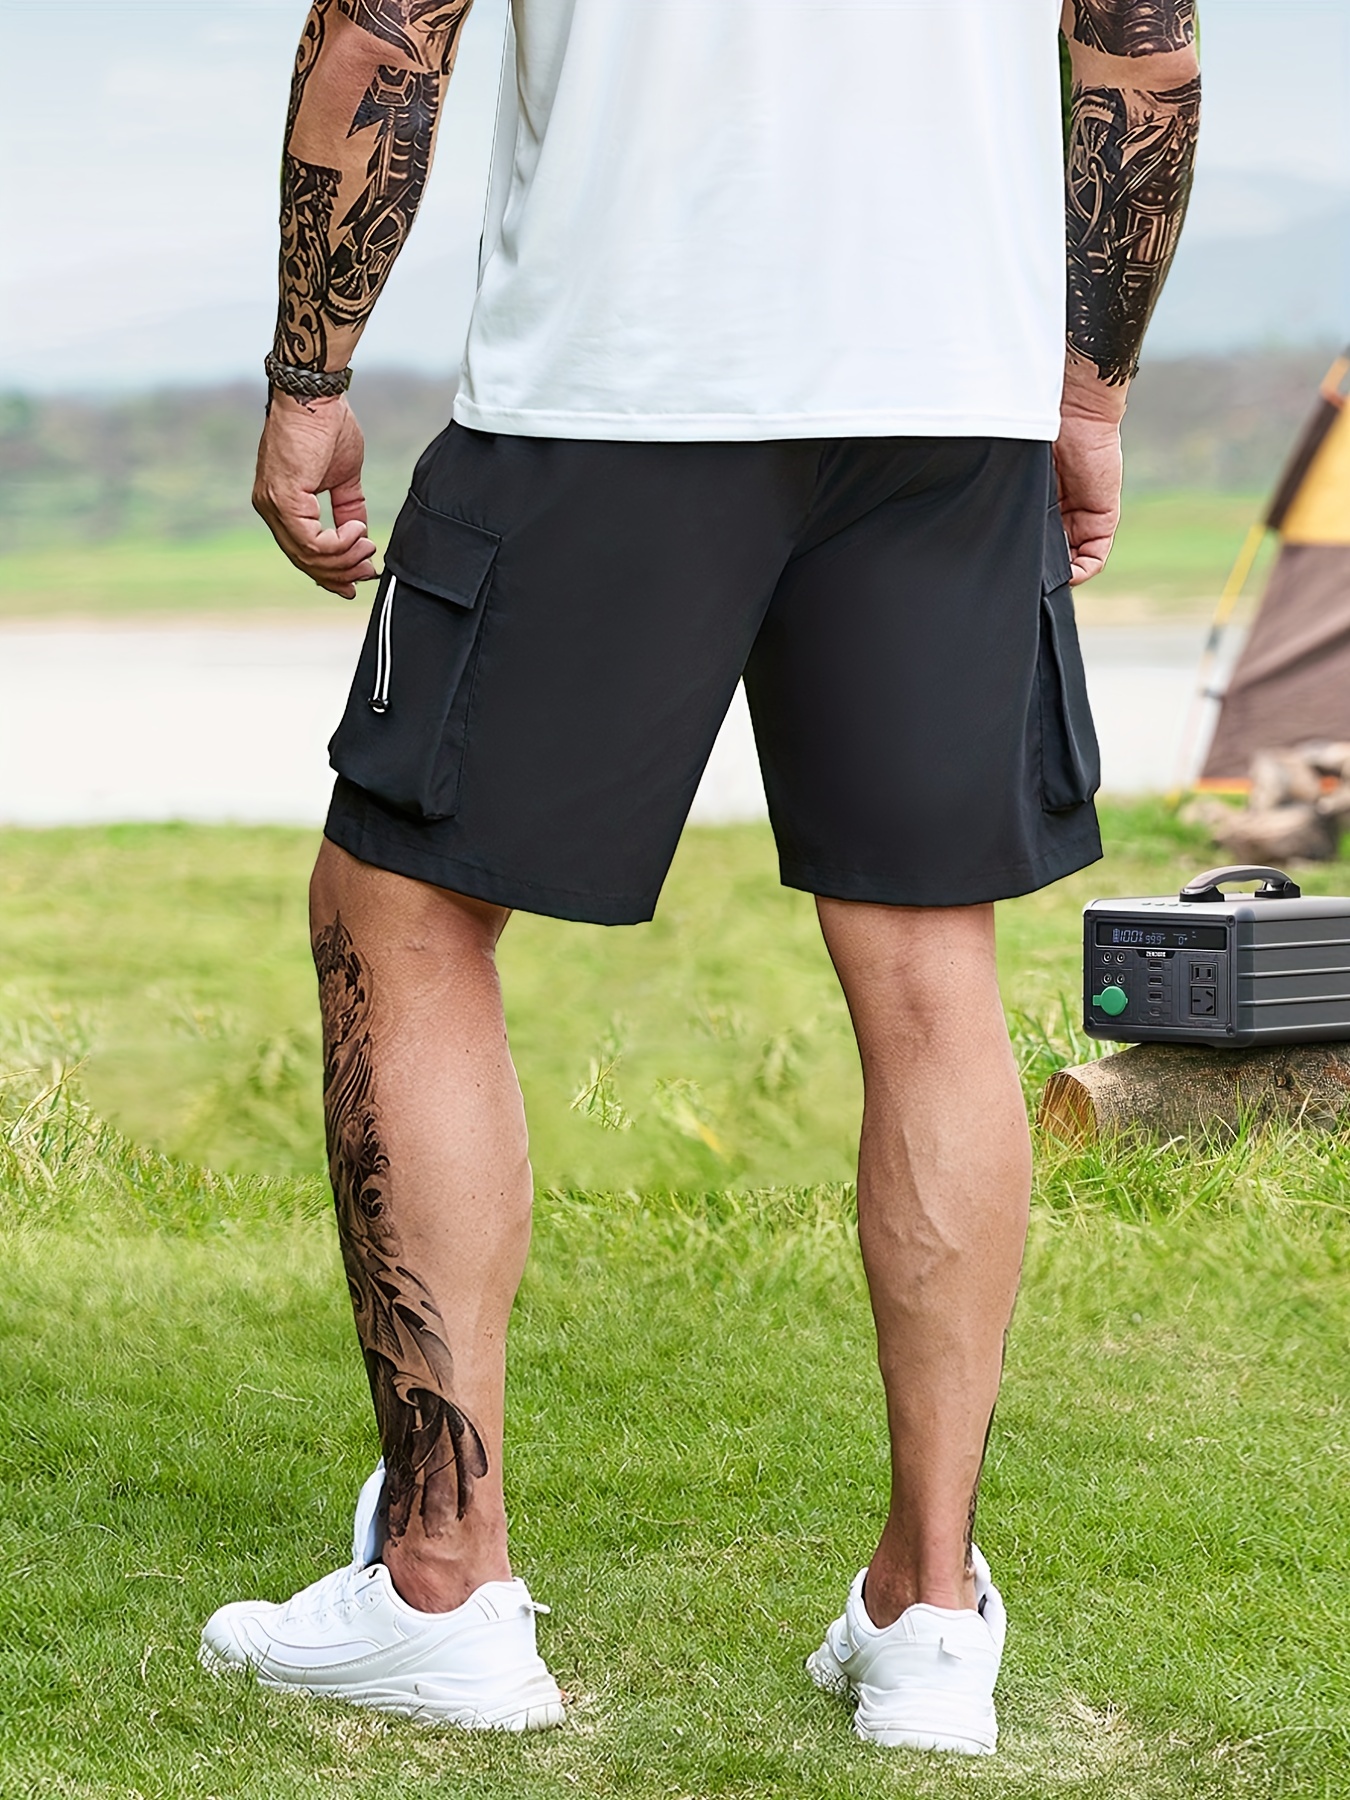 Men Plus Size Cargo Shorts Solid Color 5 Inch Pants Casual Elastic